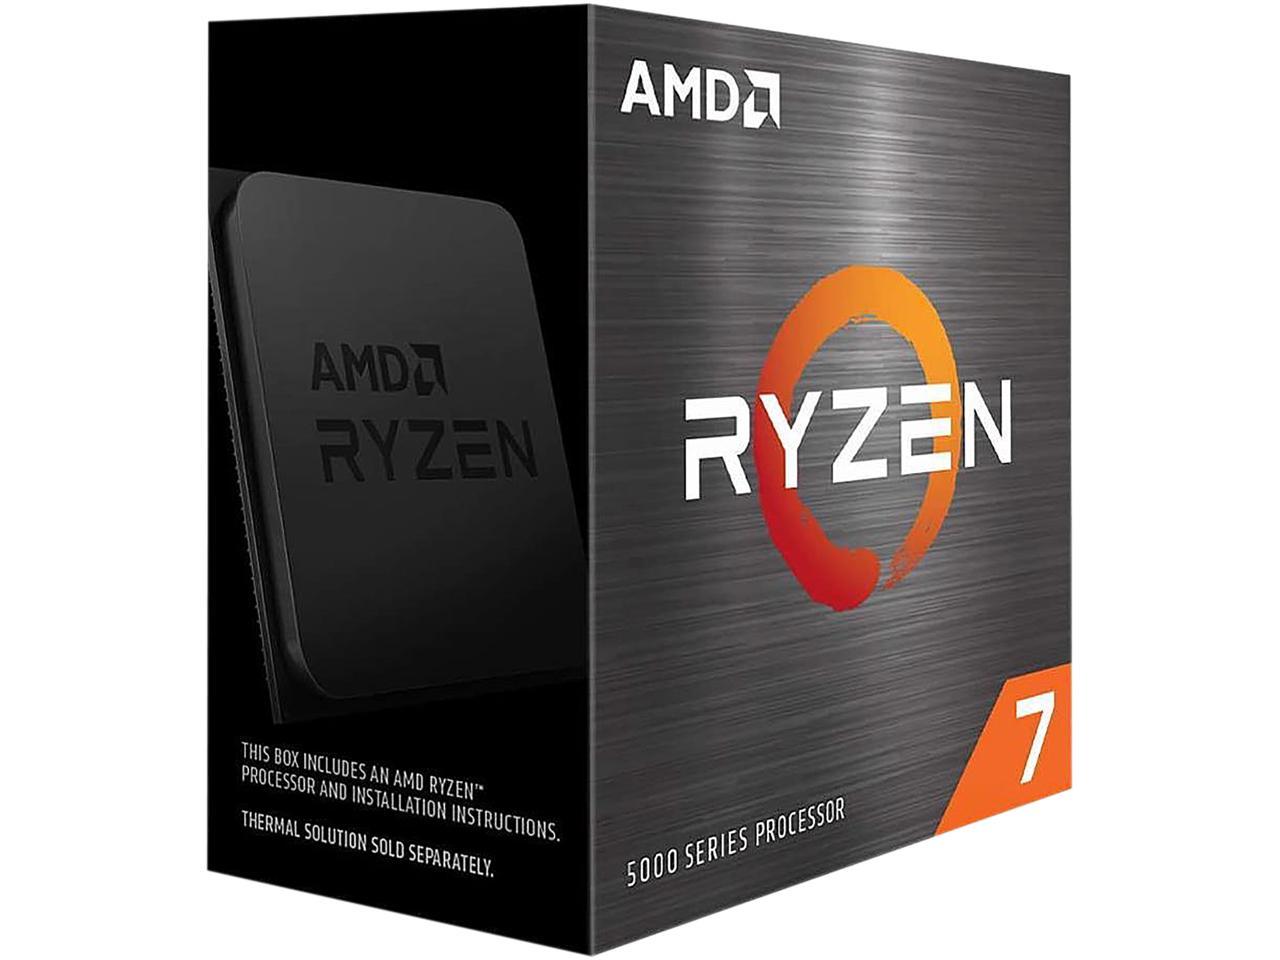 AMD Ryzen 7 5700X 3.4GHz 8-Core 16-Thread AM4 Desktop Processor $179 + Free Shipping